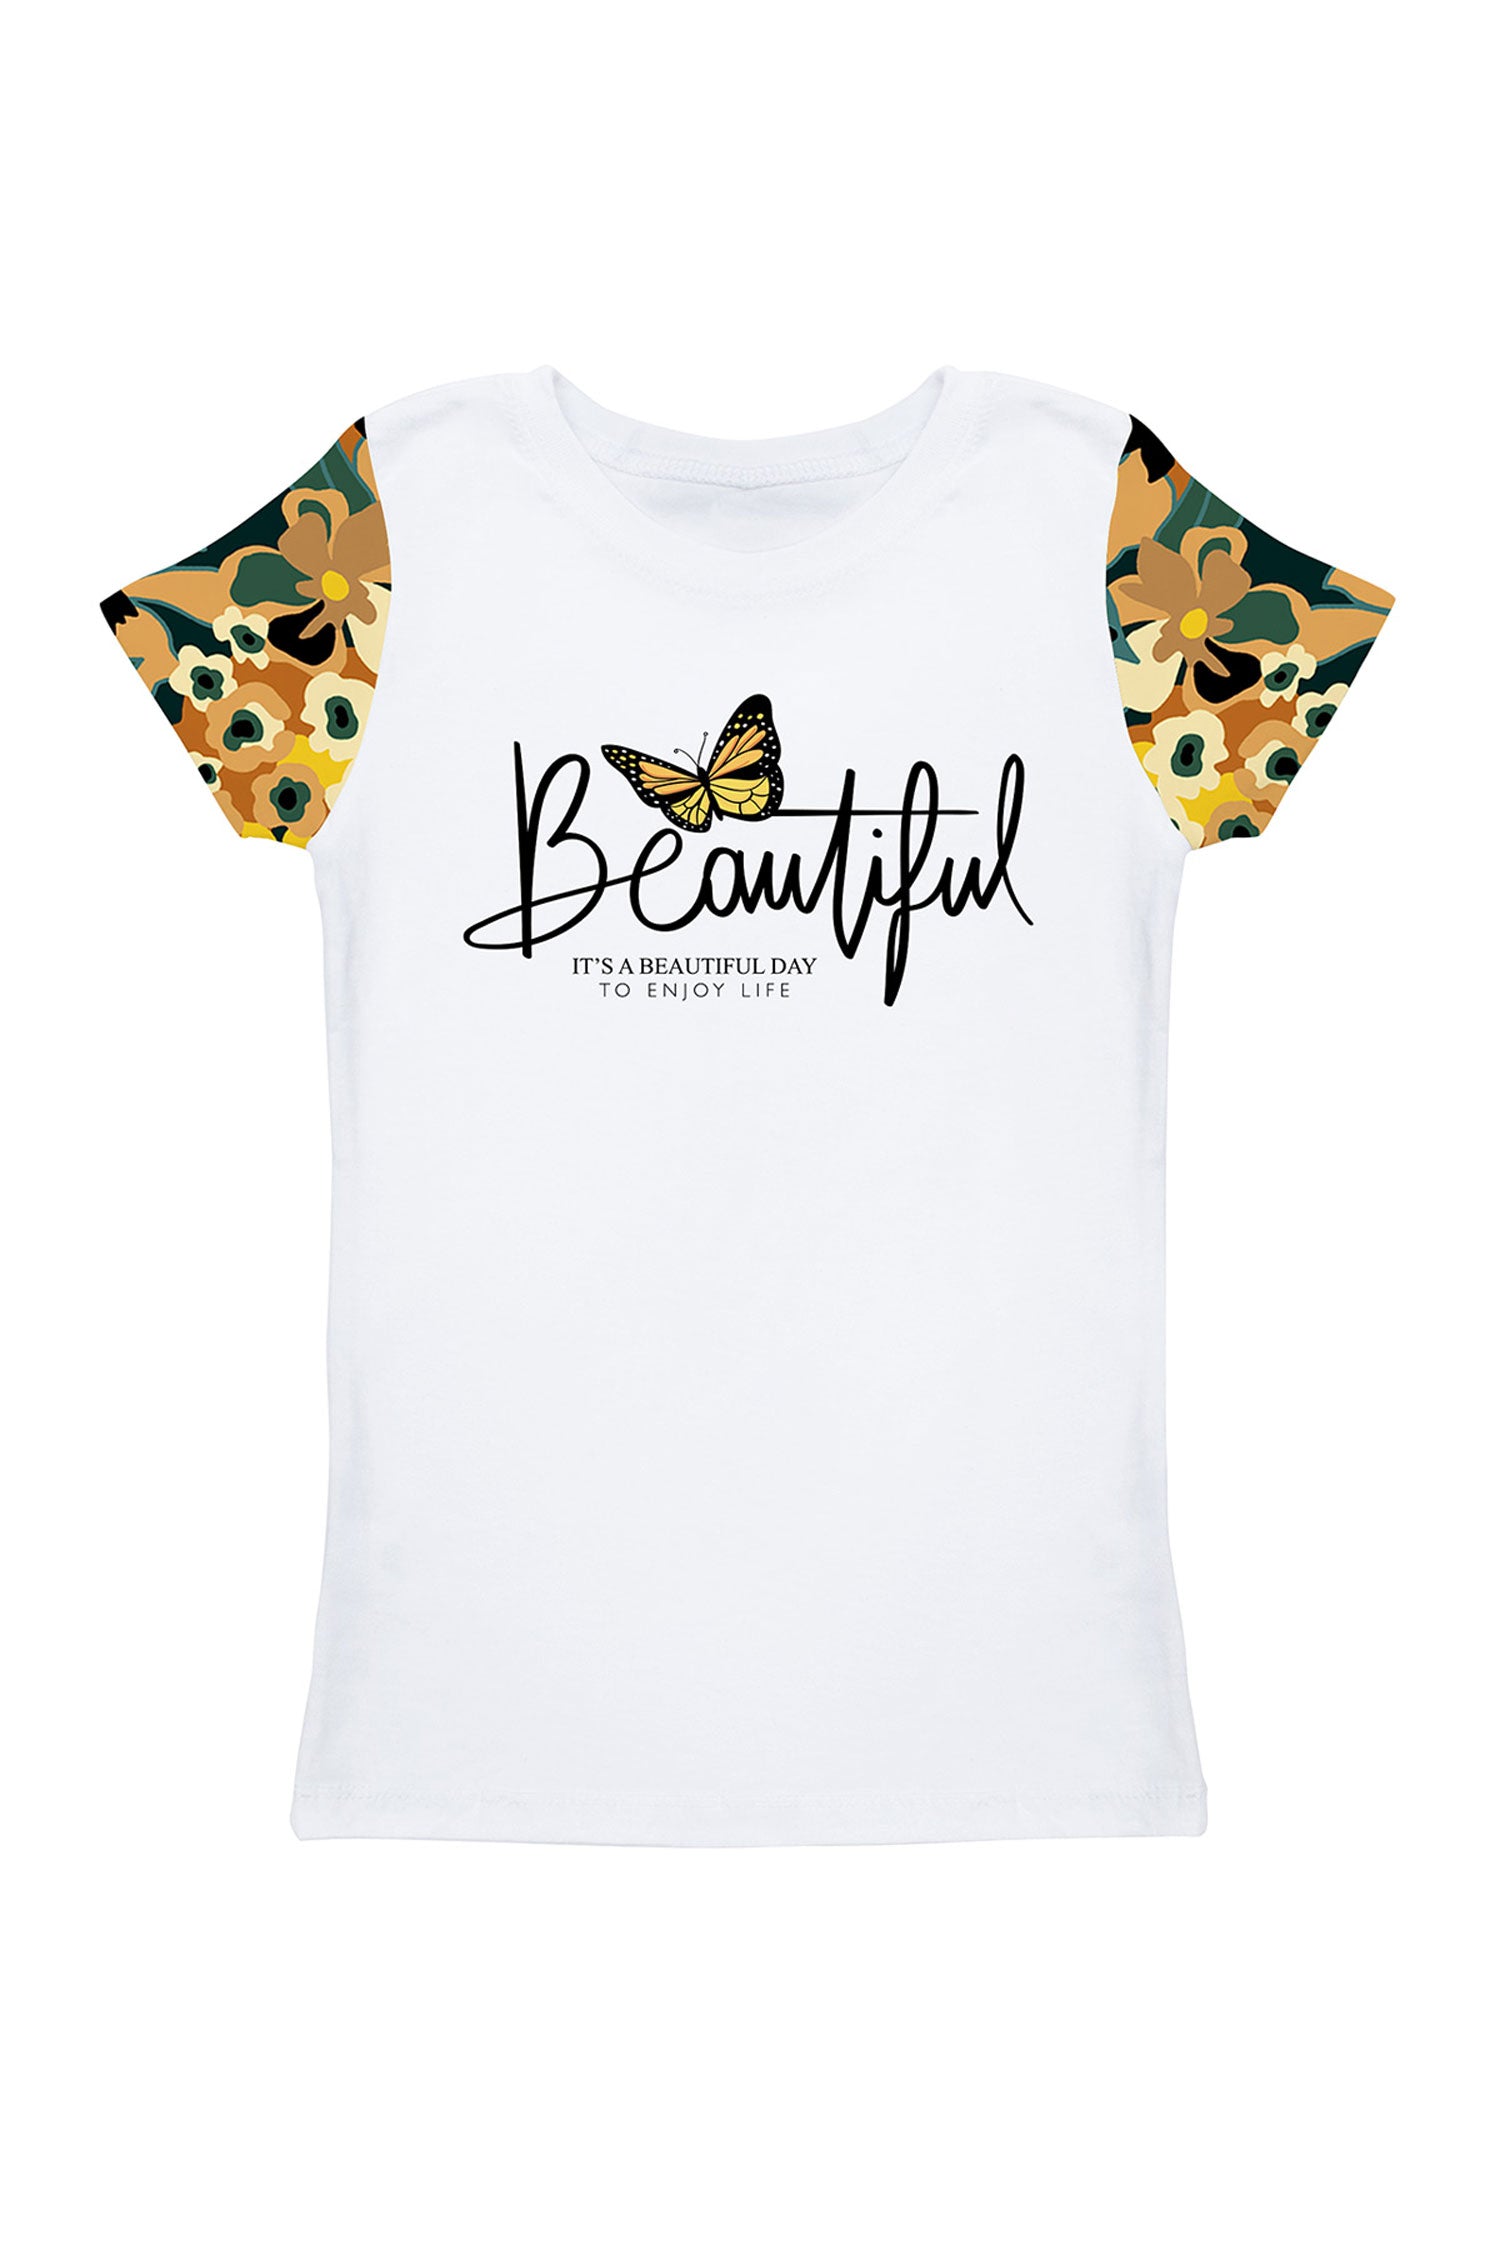 Admiration Zoe White Floral Leaf Print Designer School T-Shirt - Girls - Pineapple Clothing